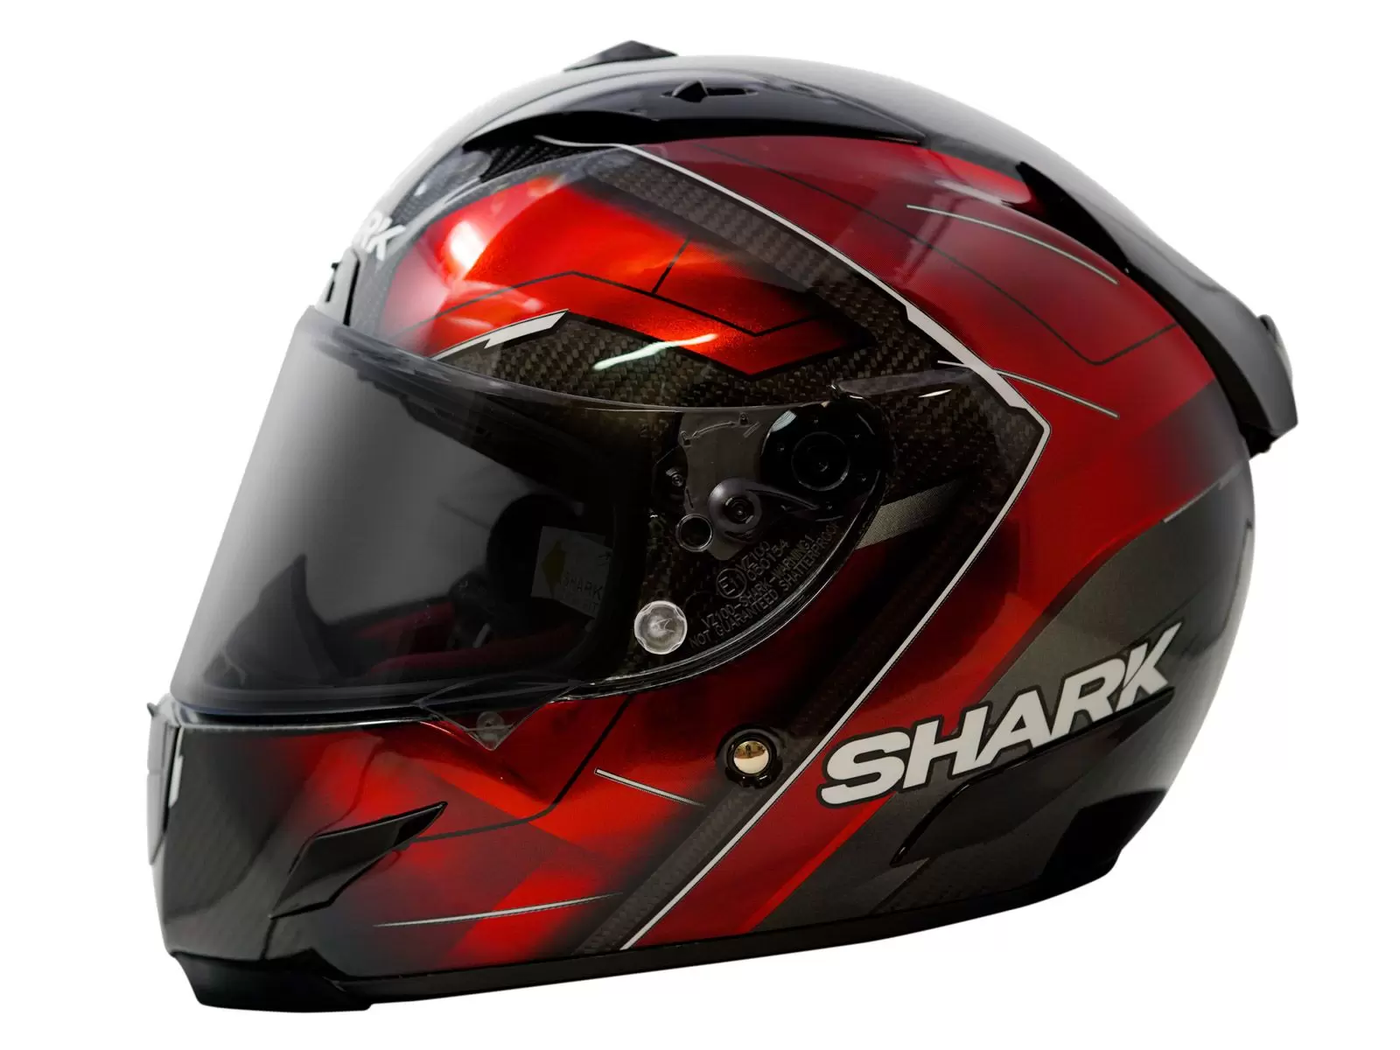 Shark Race-R Pro Carbon Deager Red vista sinistra